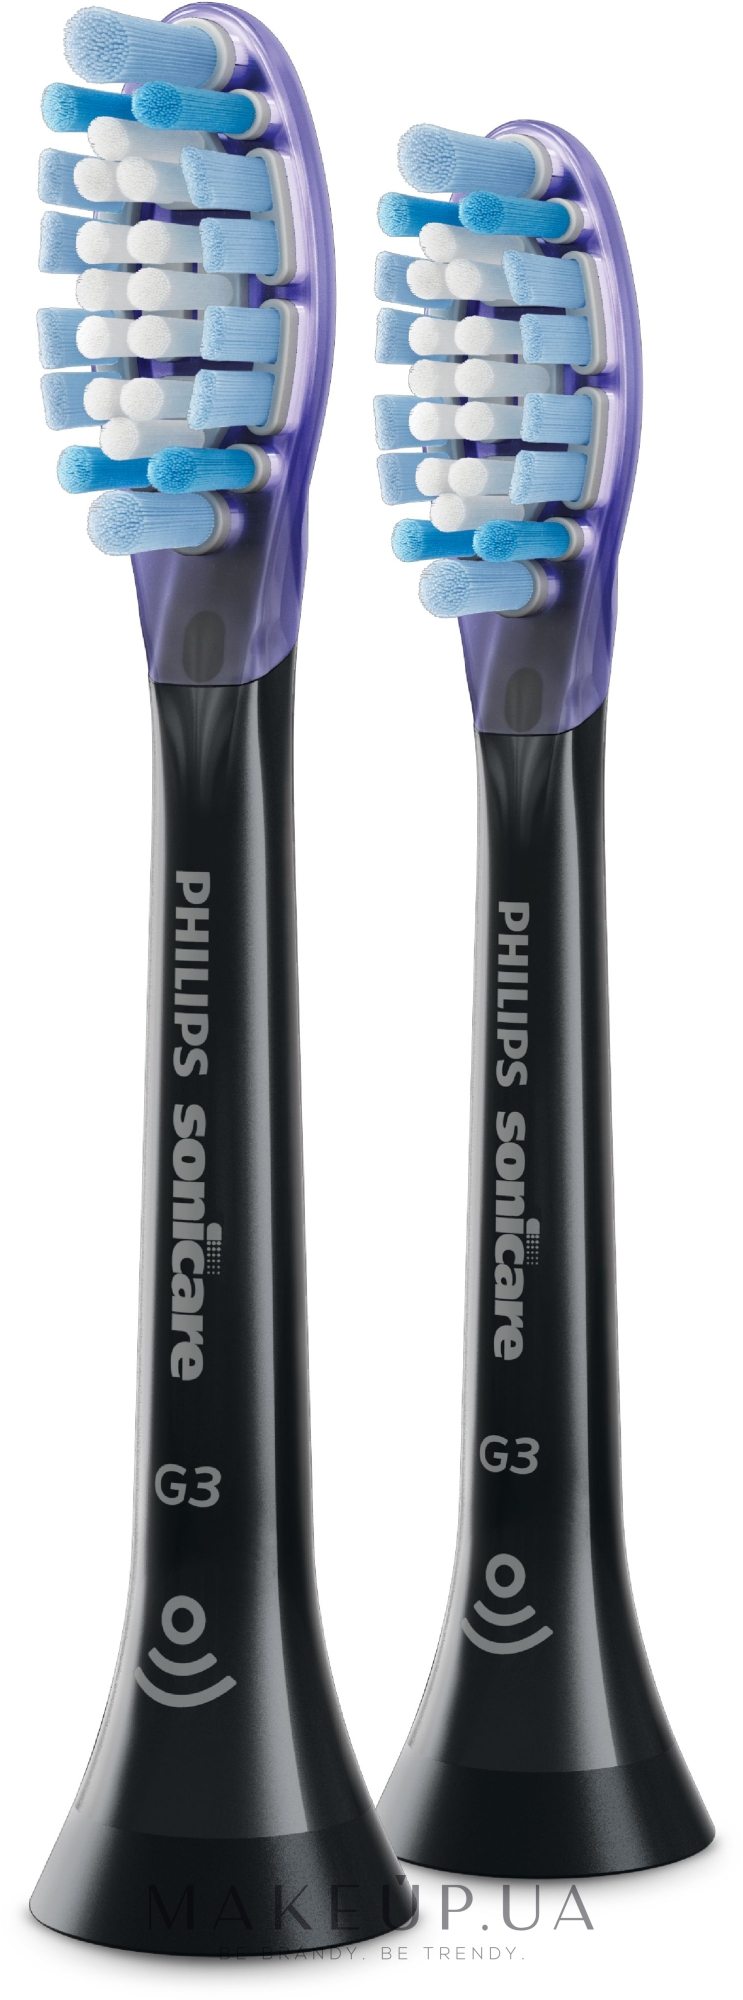 Насадки для зубной щетки HX9052/33 - Philips Sonicare HX9052/33 G3 Premium Gum Care — фото 2шт